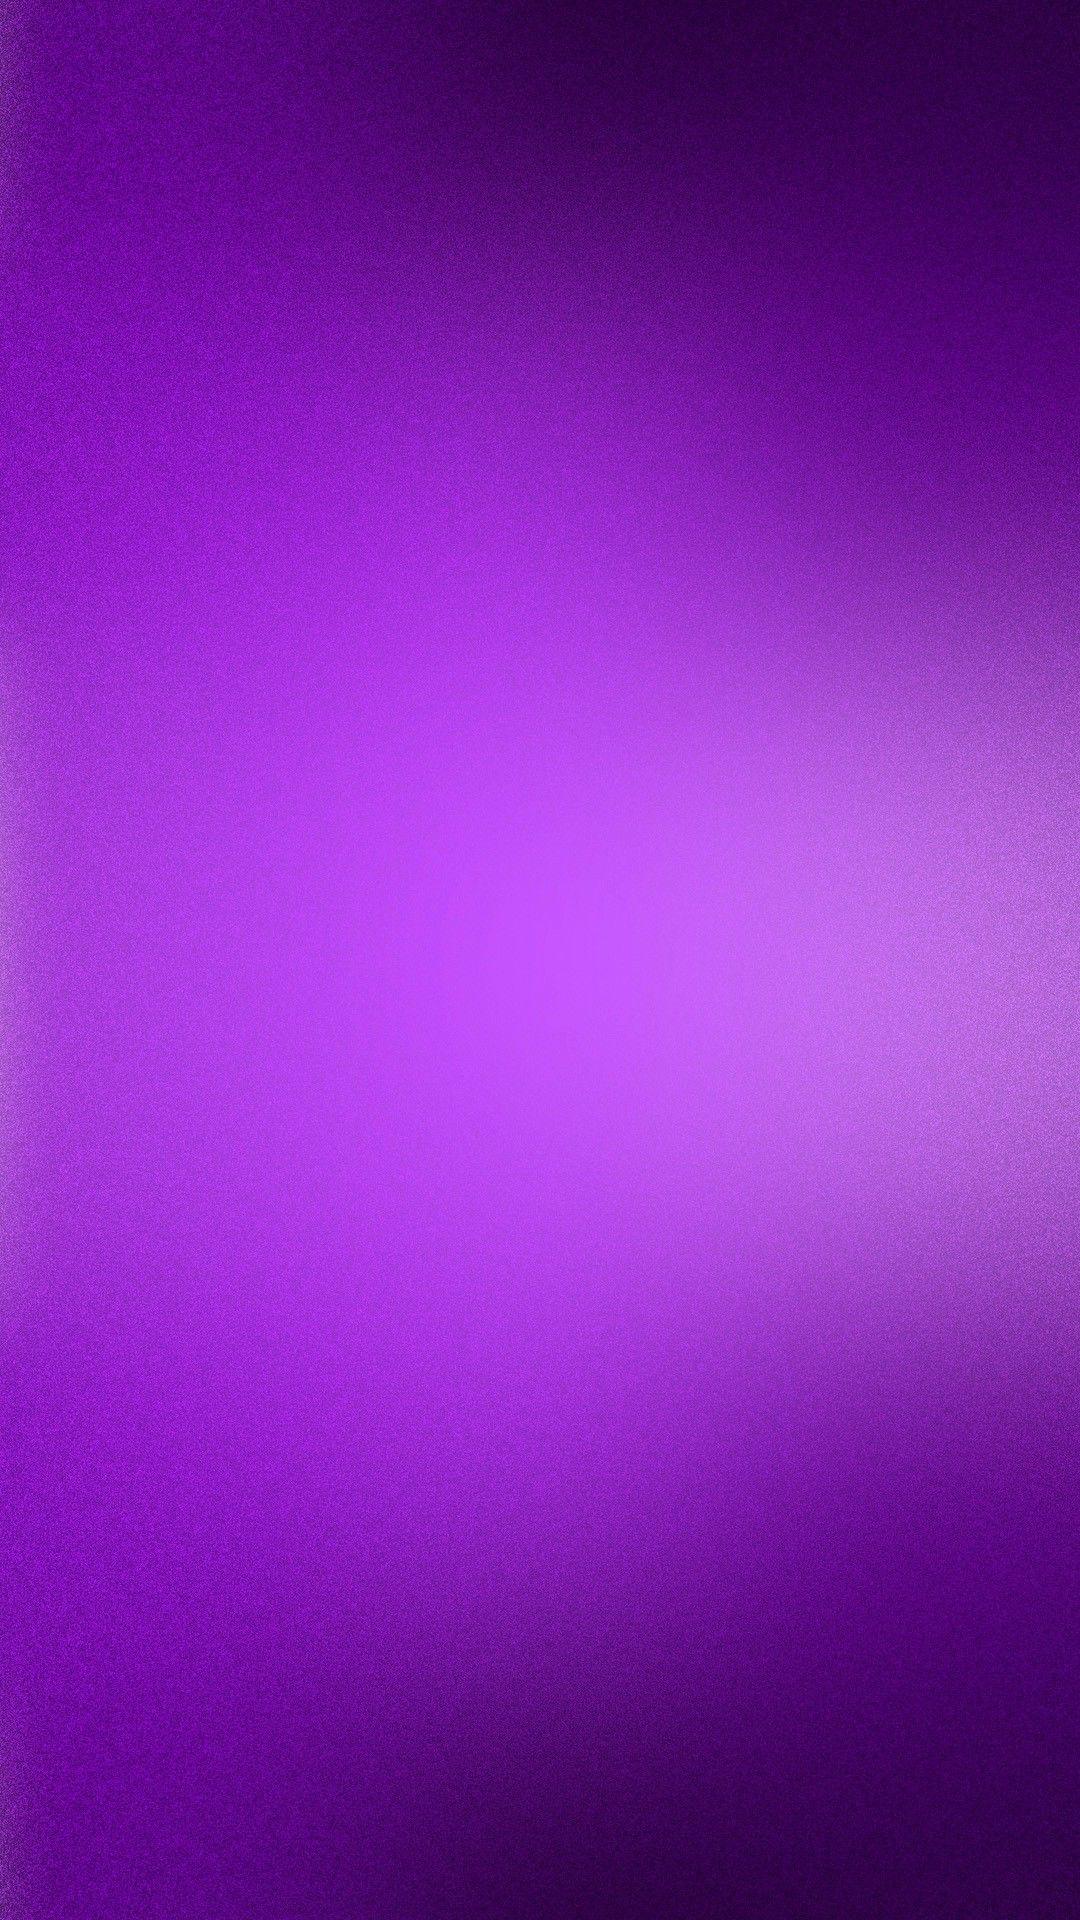 HD Purple iPhone Wallpaper. Purple wallpaper, iPhone wallpaper